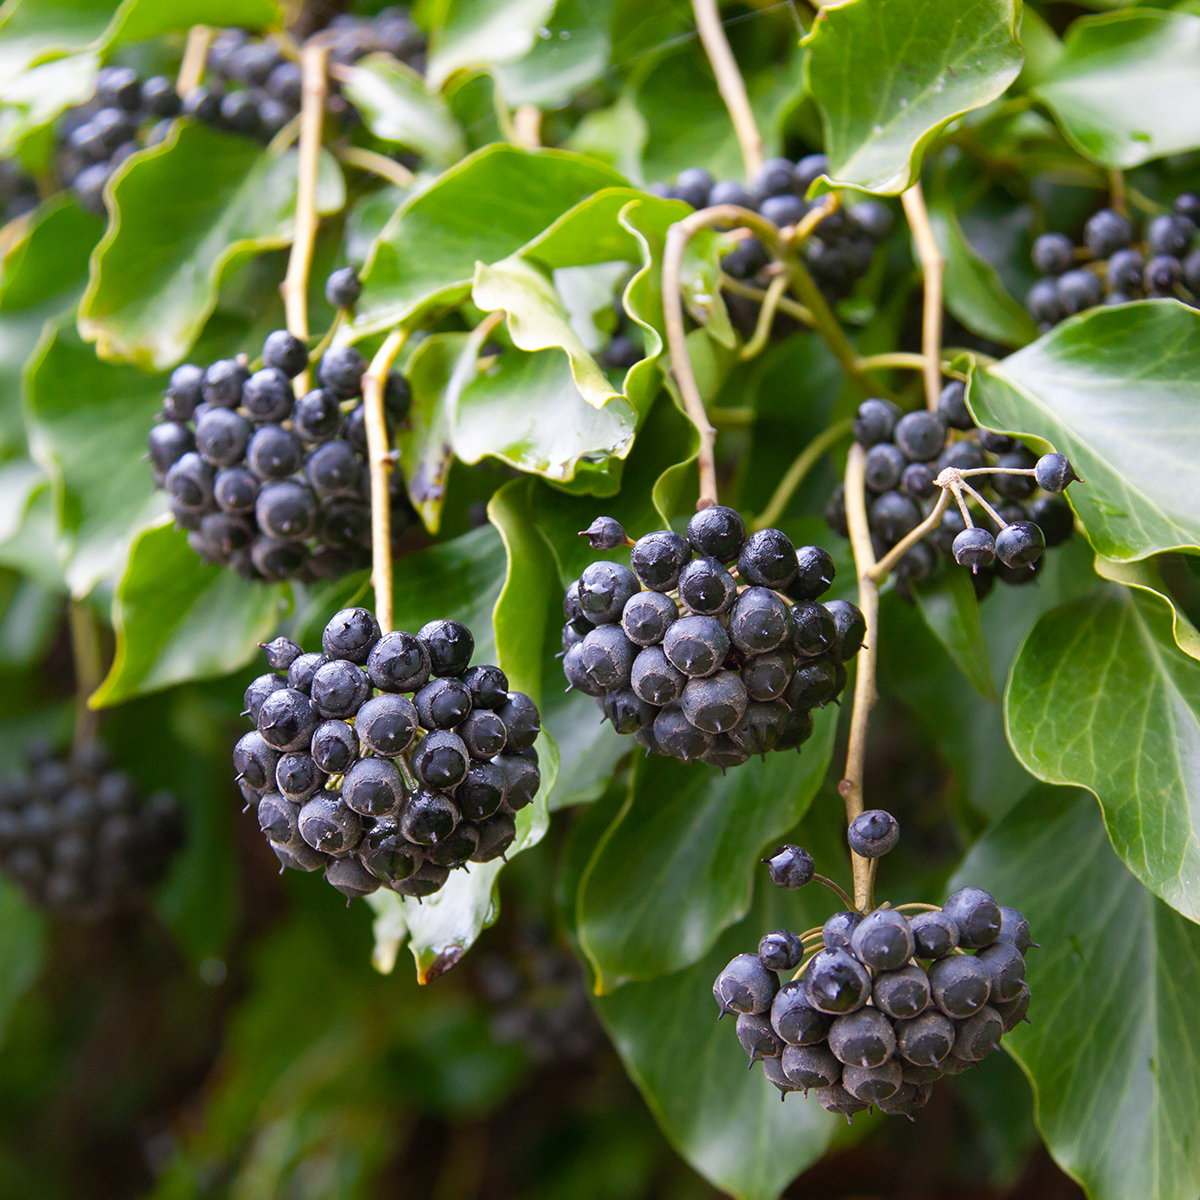 Common ivy (hedera) berries.